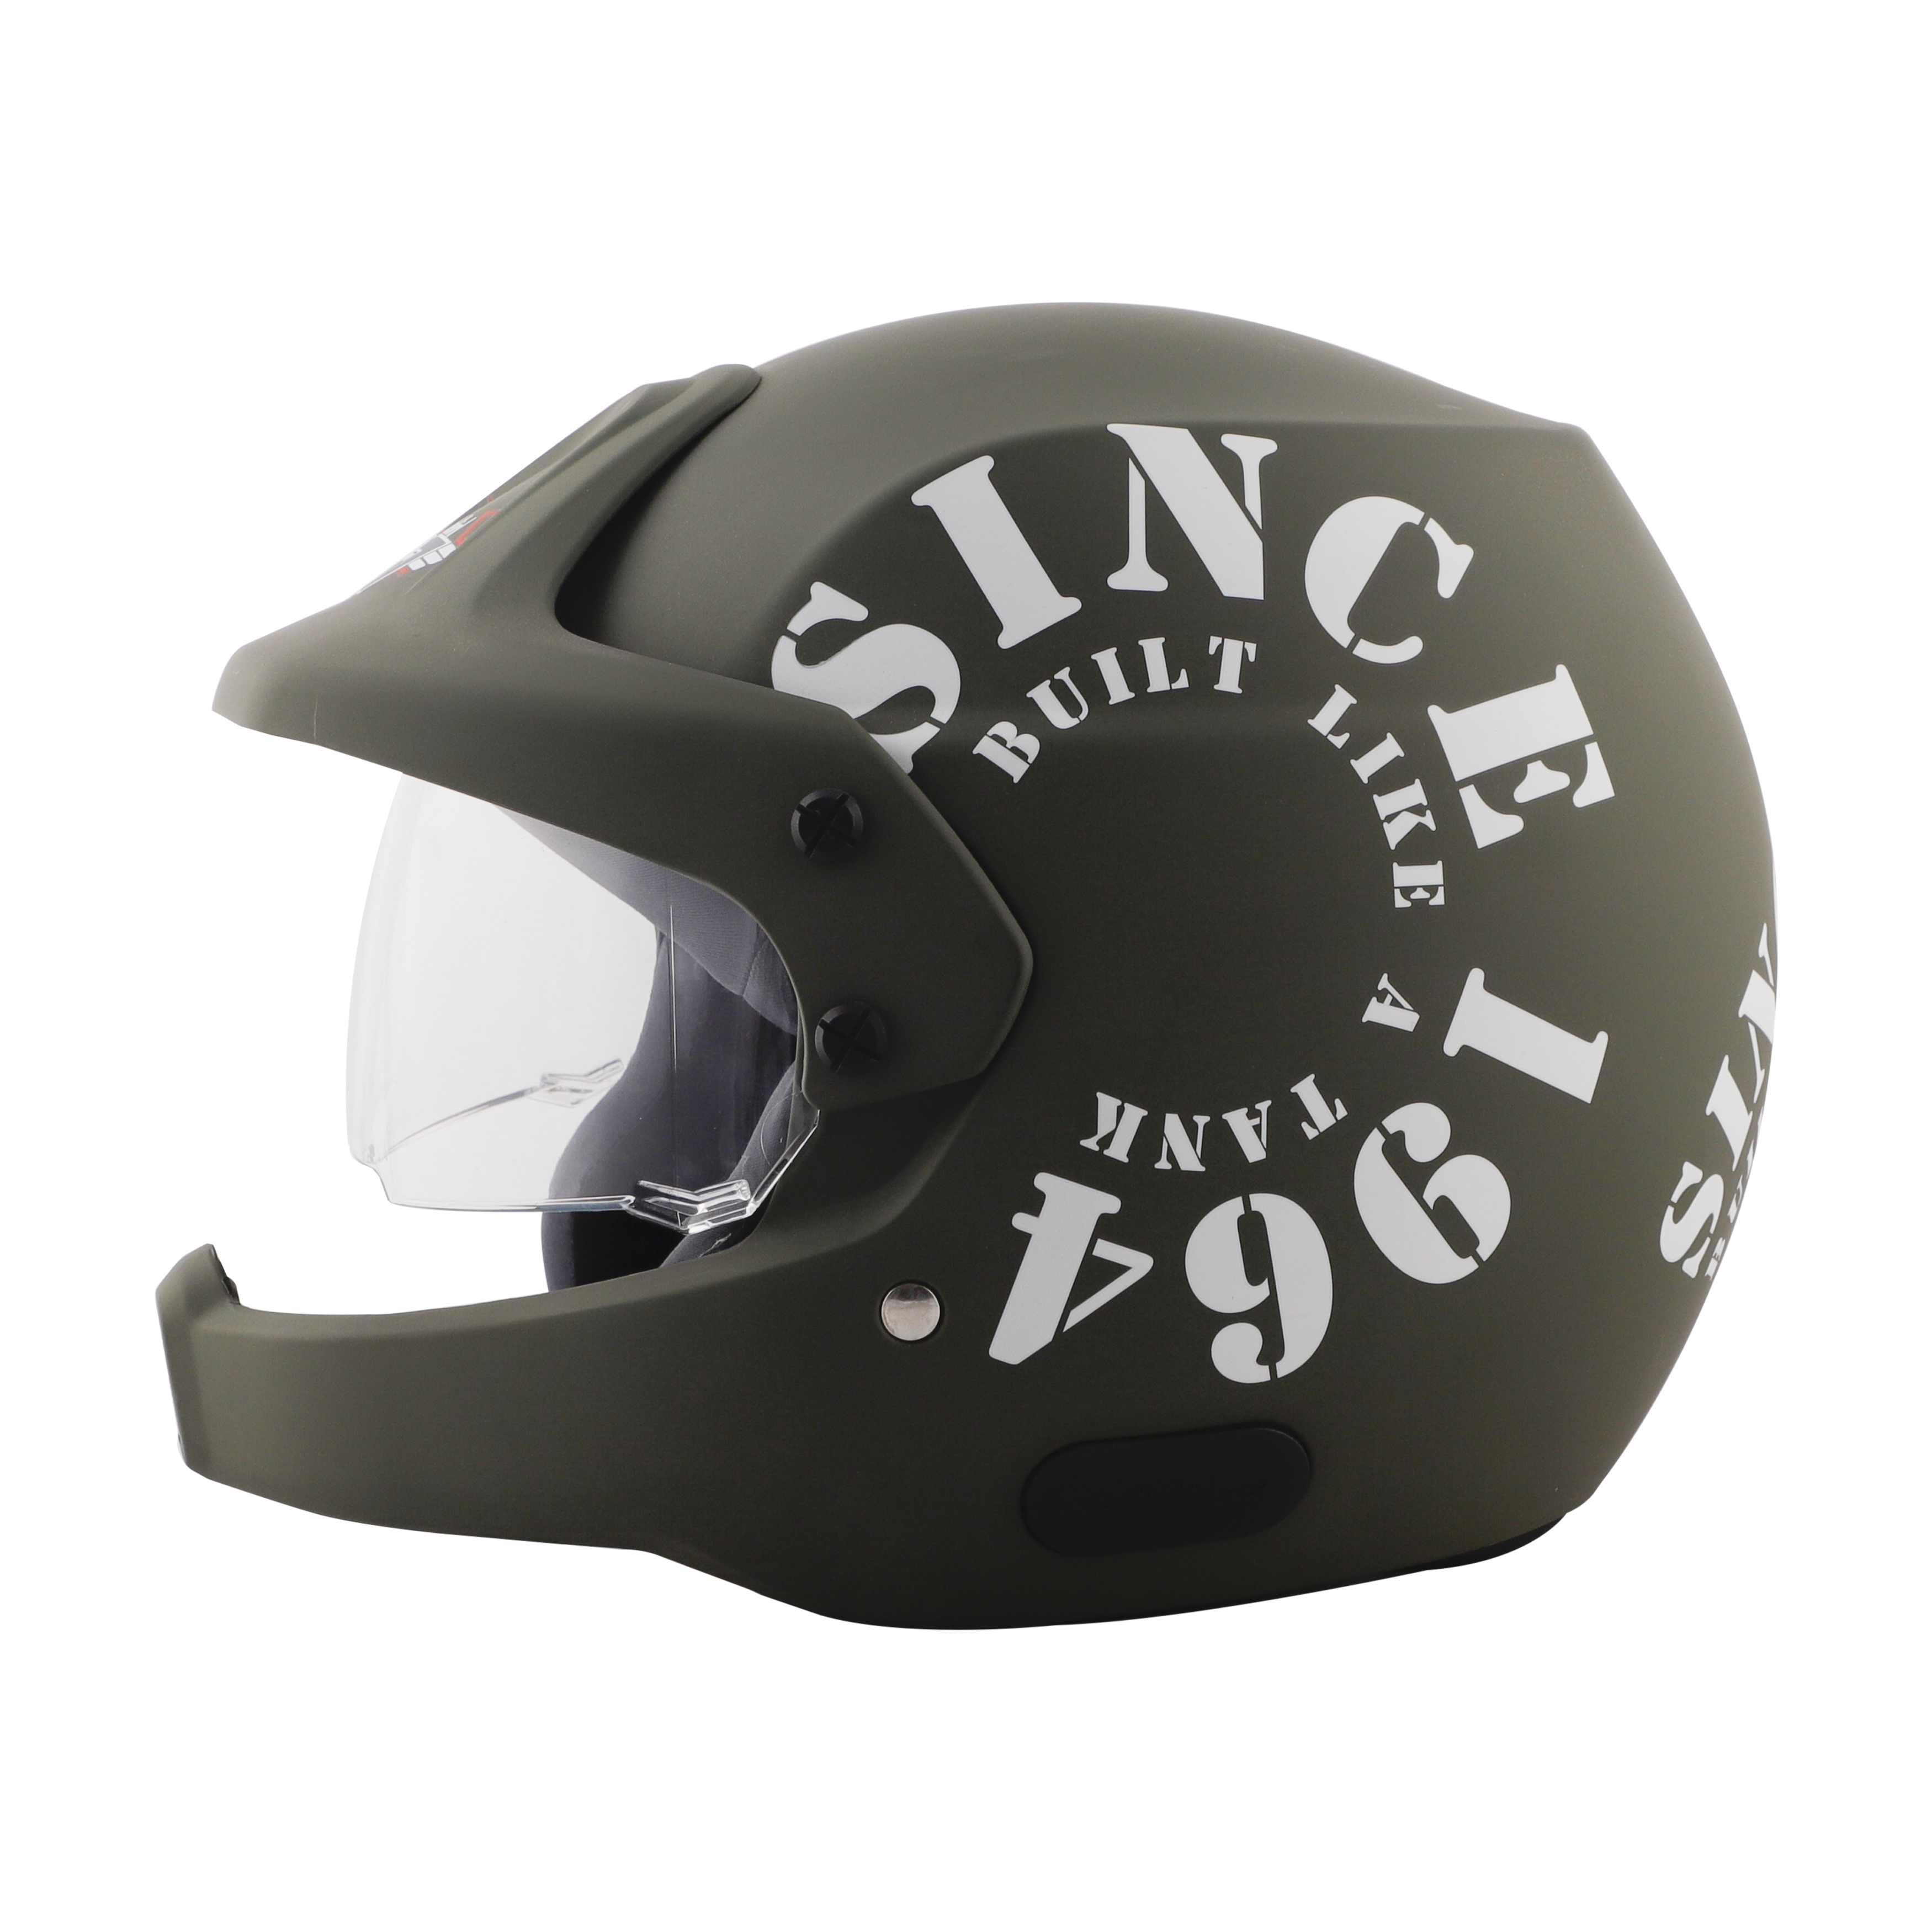 Steelbird 7Wings Rally Tank Open Face Helmet, ISI Certified Off Road Helmet (Matt Battle Green White With Clear Visor)